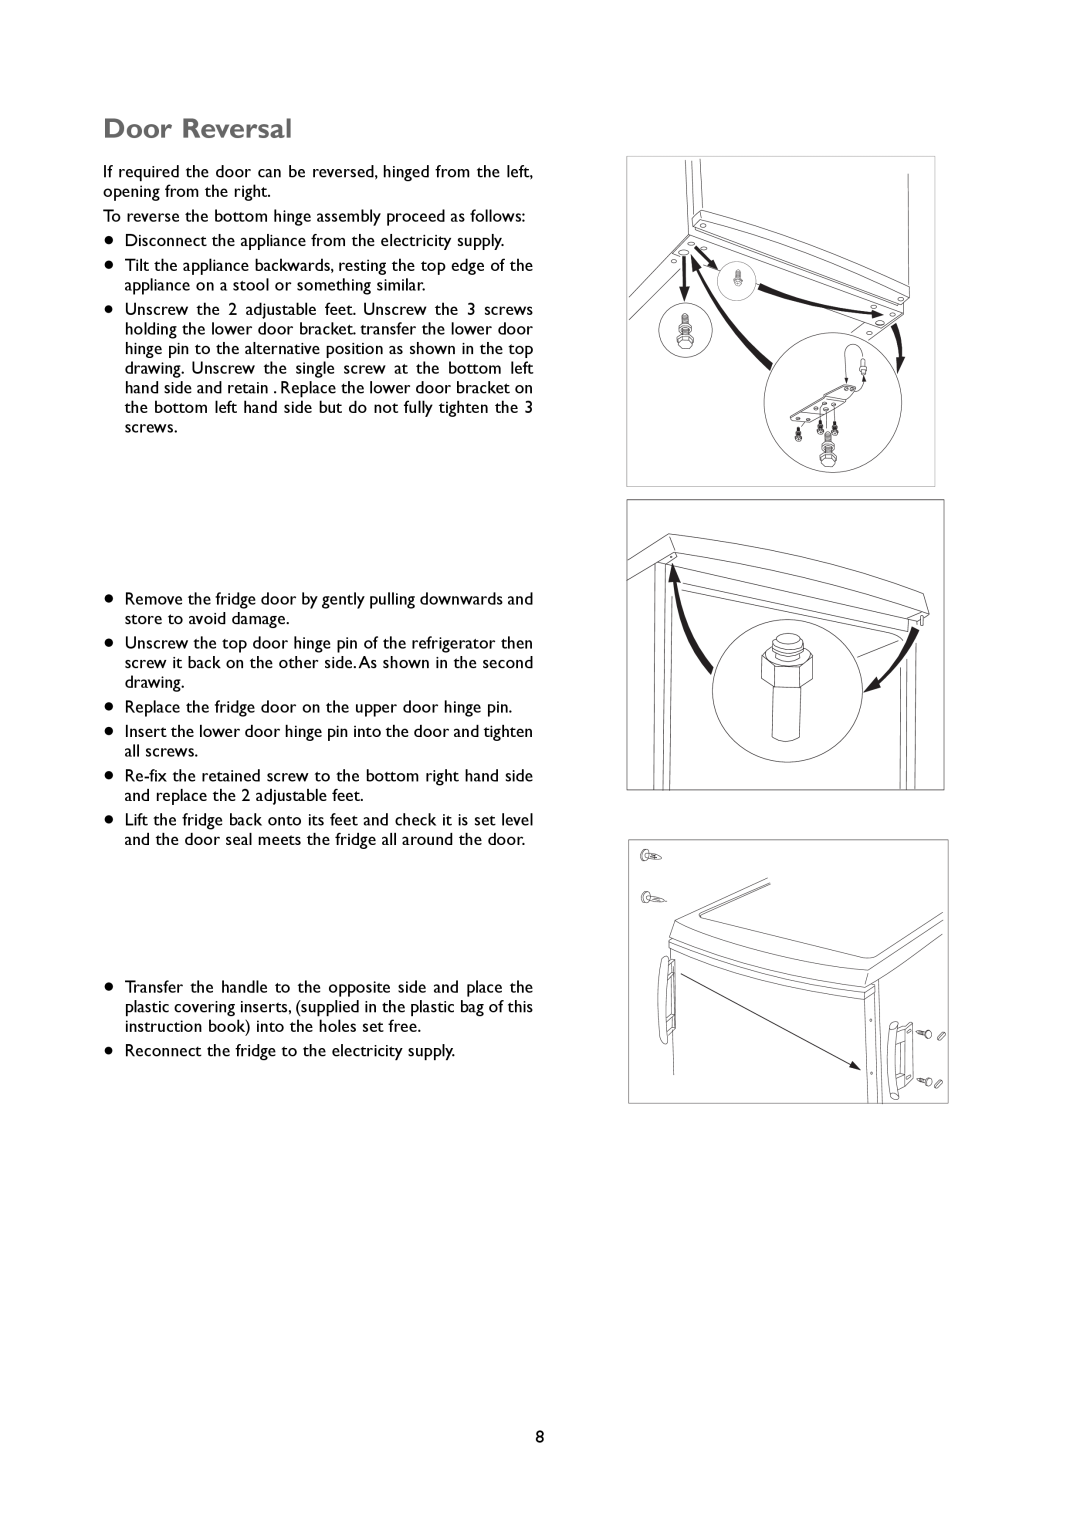 John Lewis JLUCFRW6001 instruction manual Door Reversal 